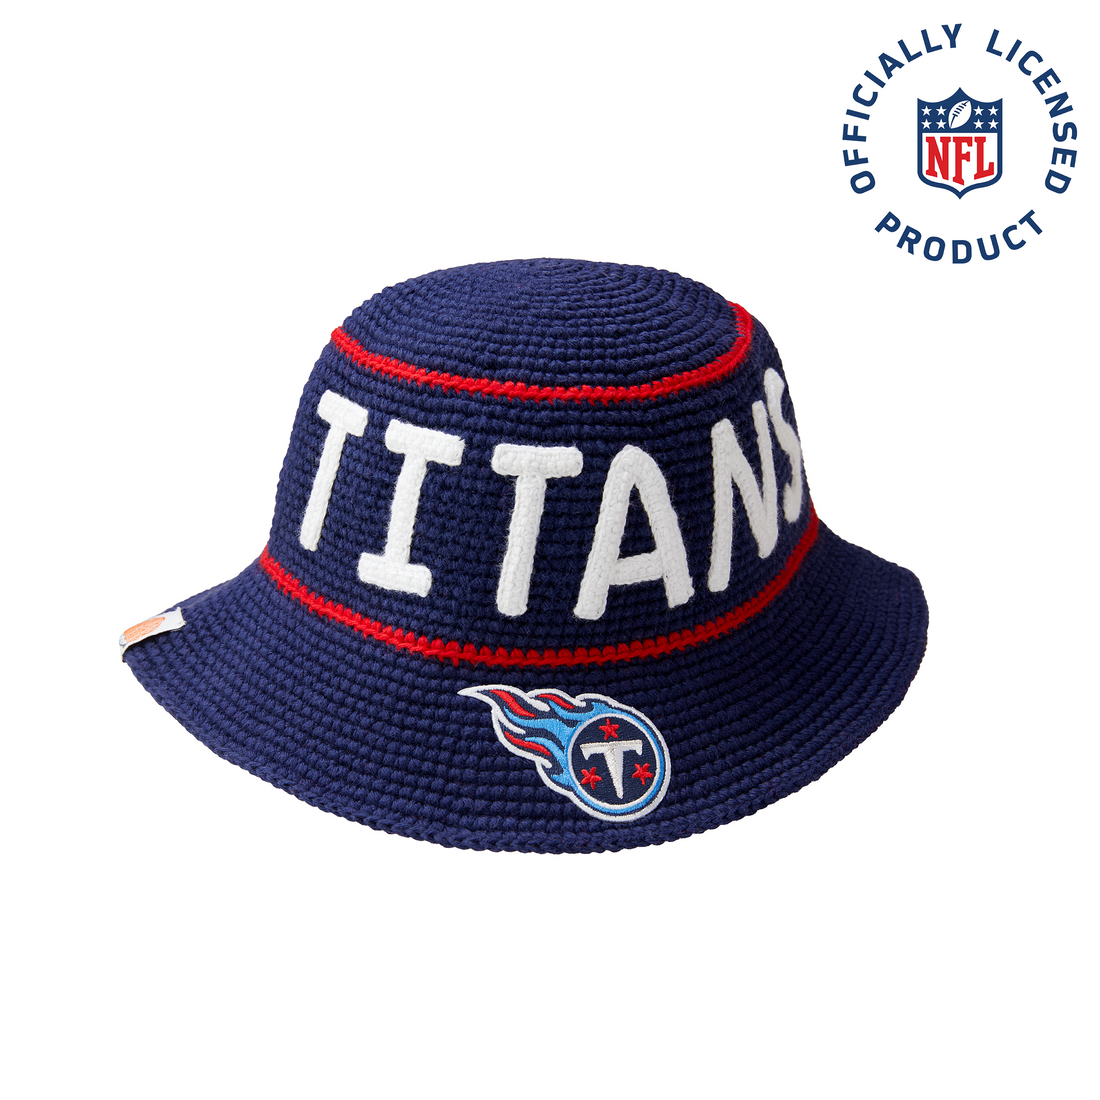 The Titans NFL Bucket Hat